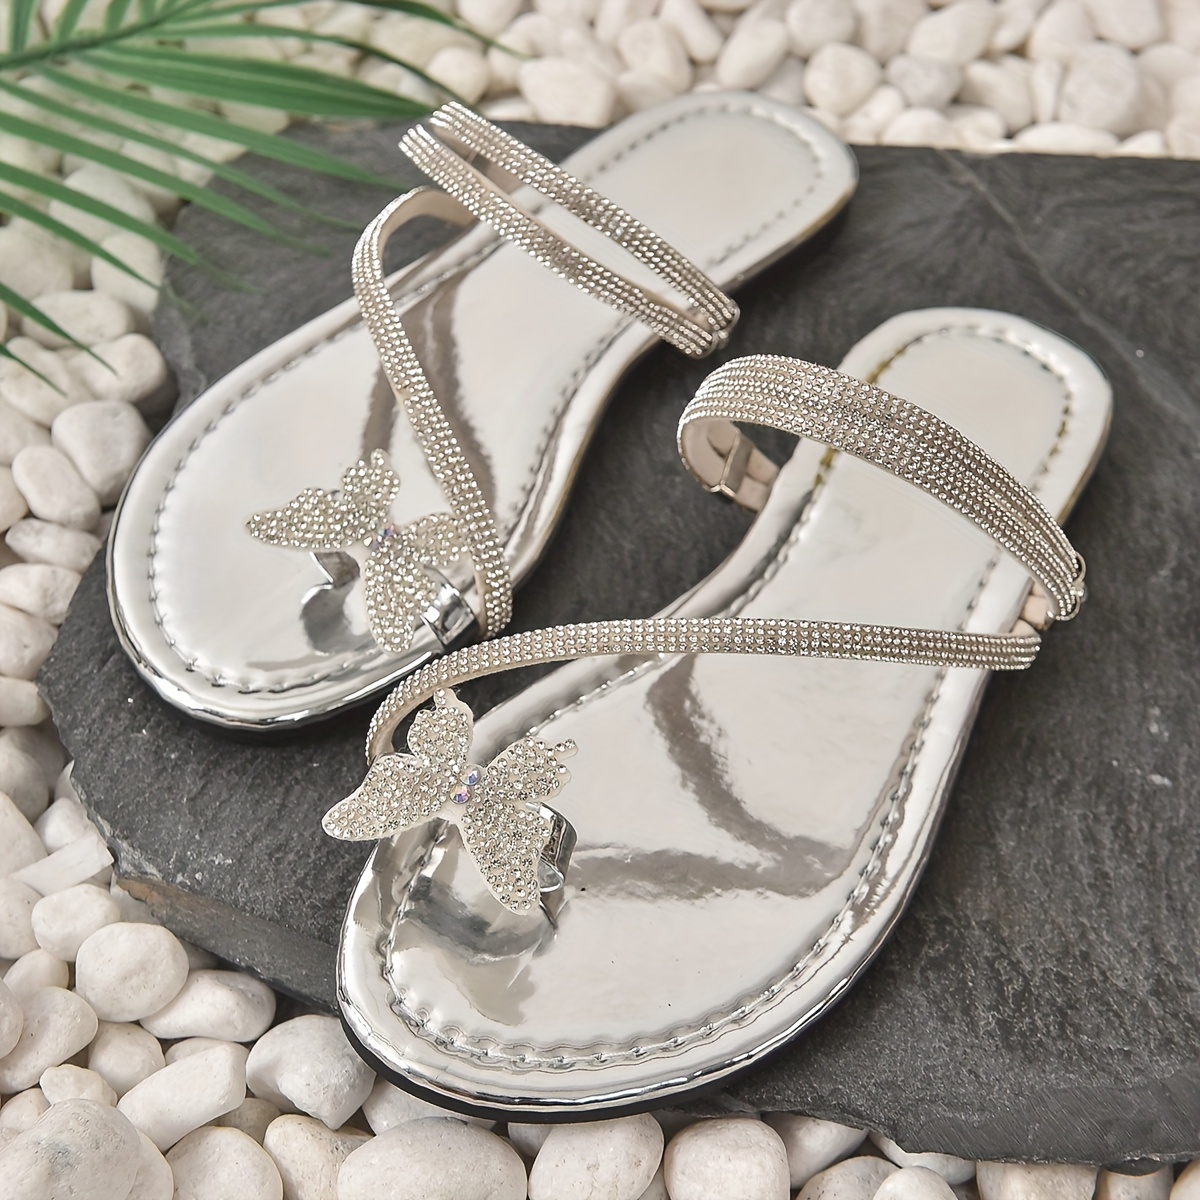 Cethrio Womens Summer Flats Sandals- Slides Sandal with Rhinestone